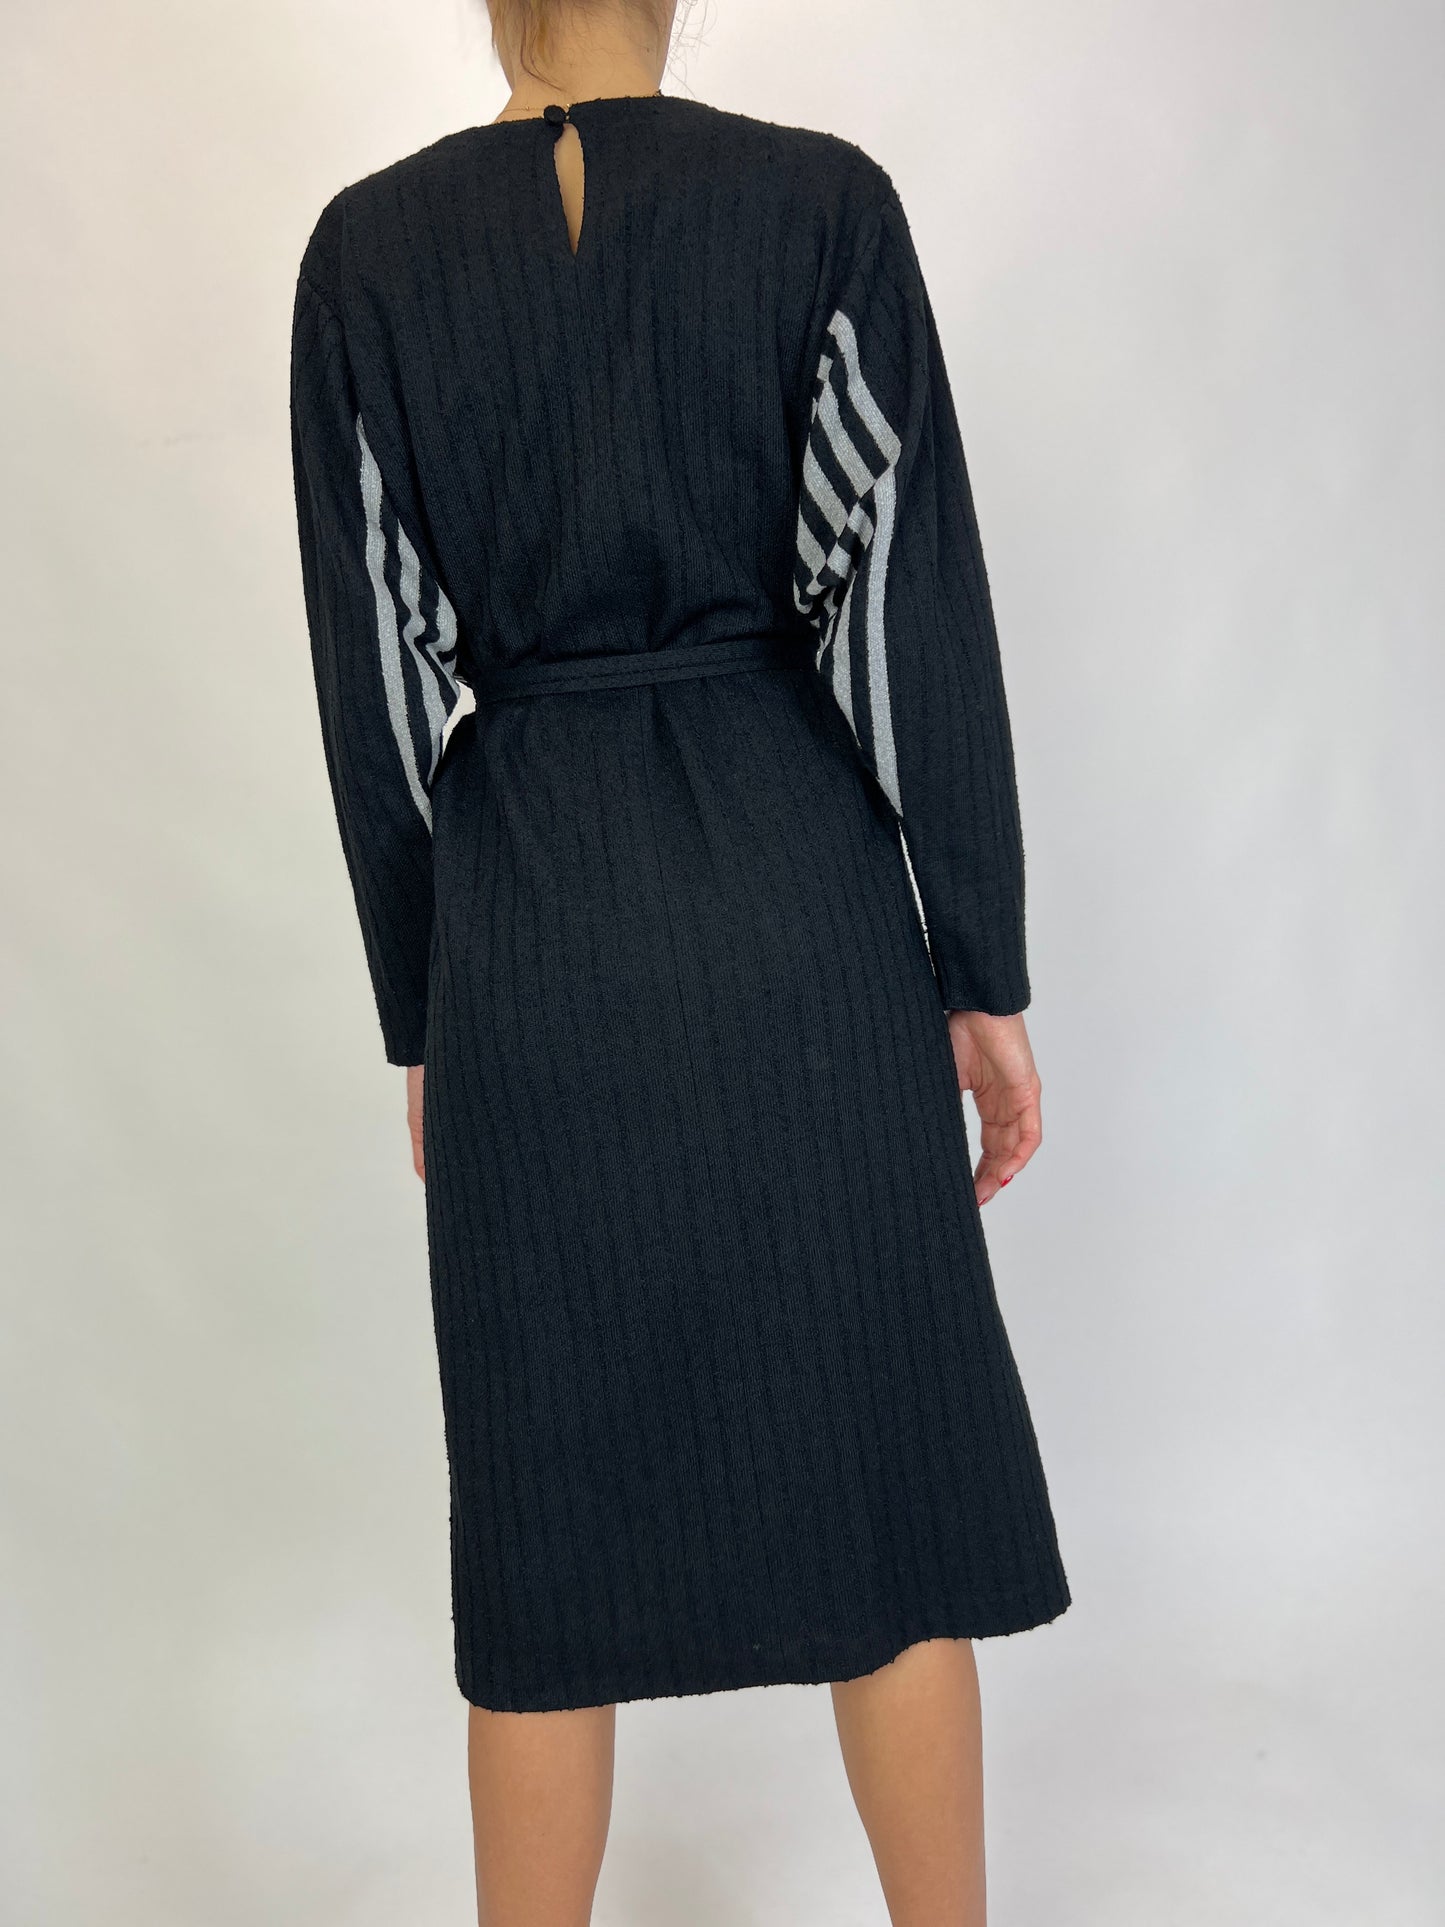 Rochie vintage cu mânecă fluture din tricot plin texturat